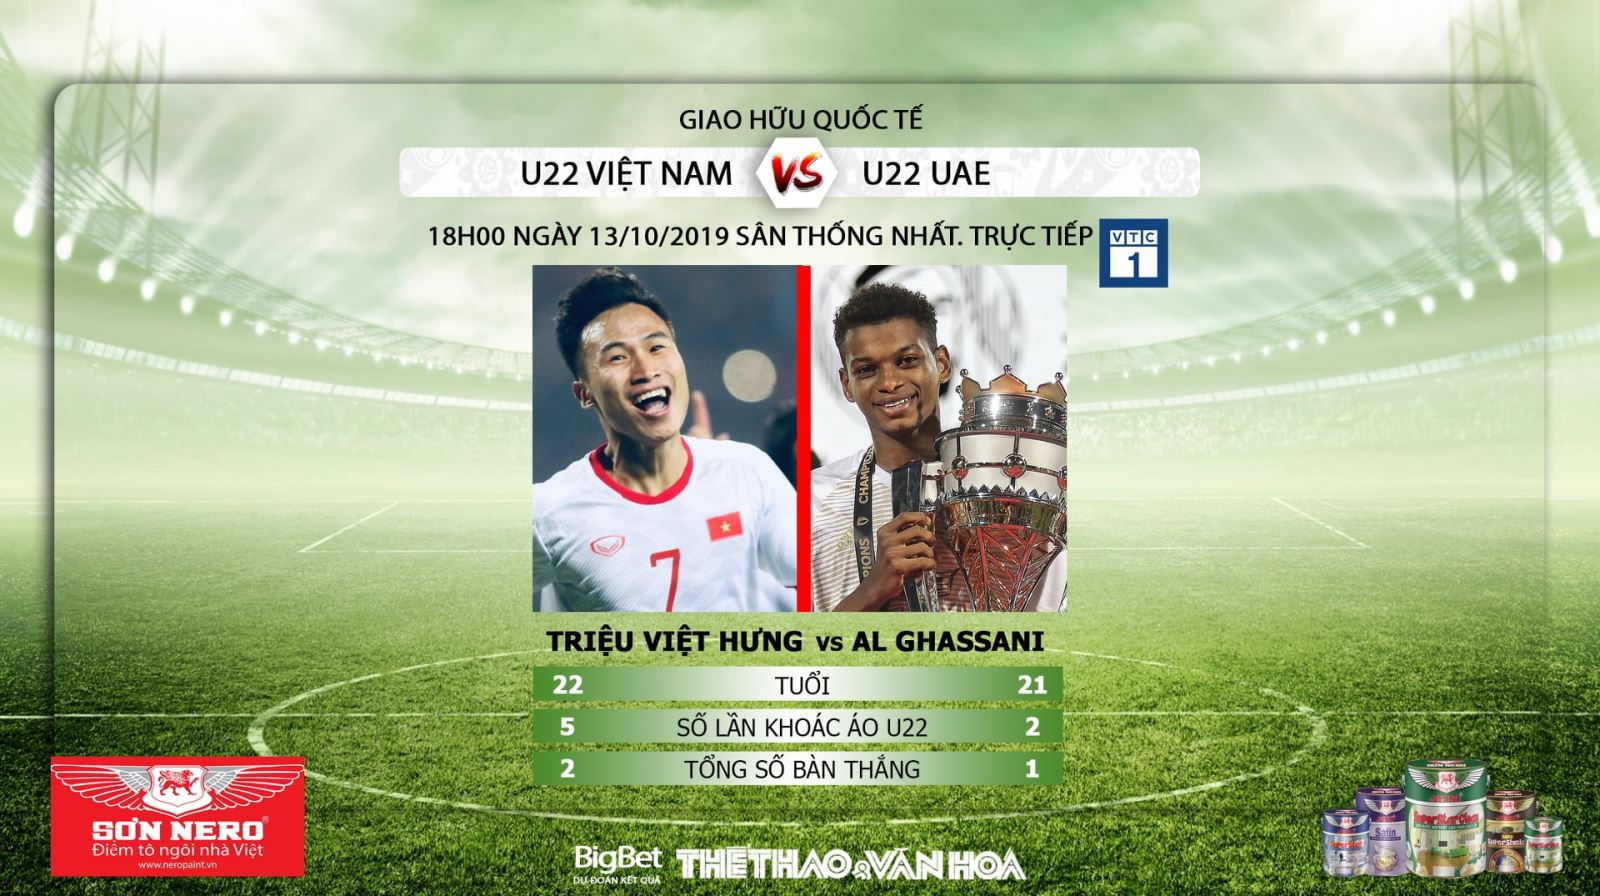 U22 Việt Nam đấu với U22 UAE, truc tiep bong da hôm nay, U22 Việt Nam vs UAE, trực tiếp bóng đá, VTC1, VTC3, VTV6, VTV5, xem bóng đá trực tuyến, lich bong da hom nay